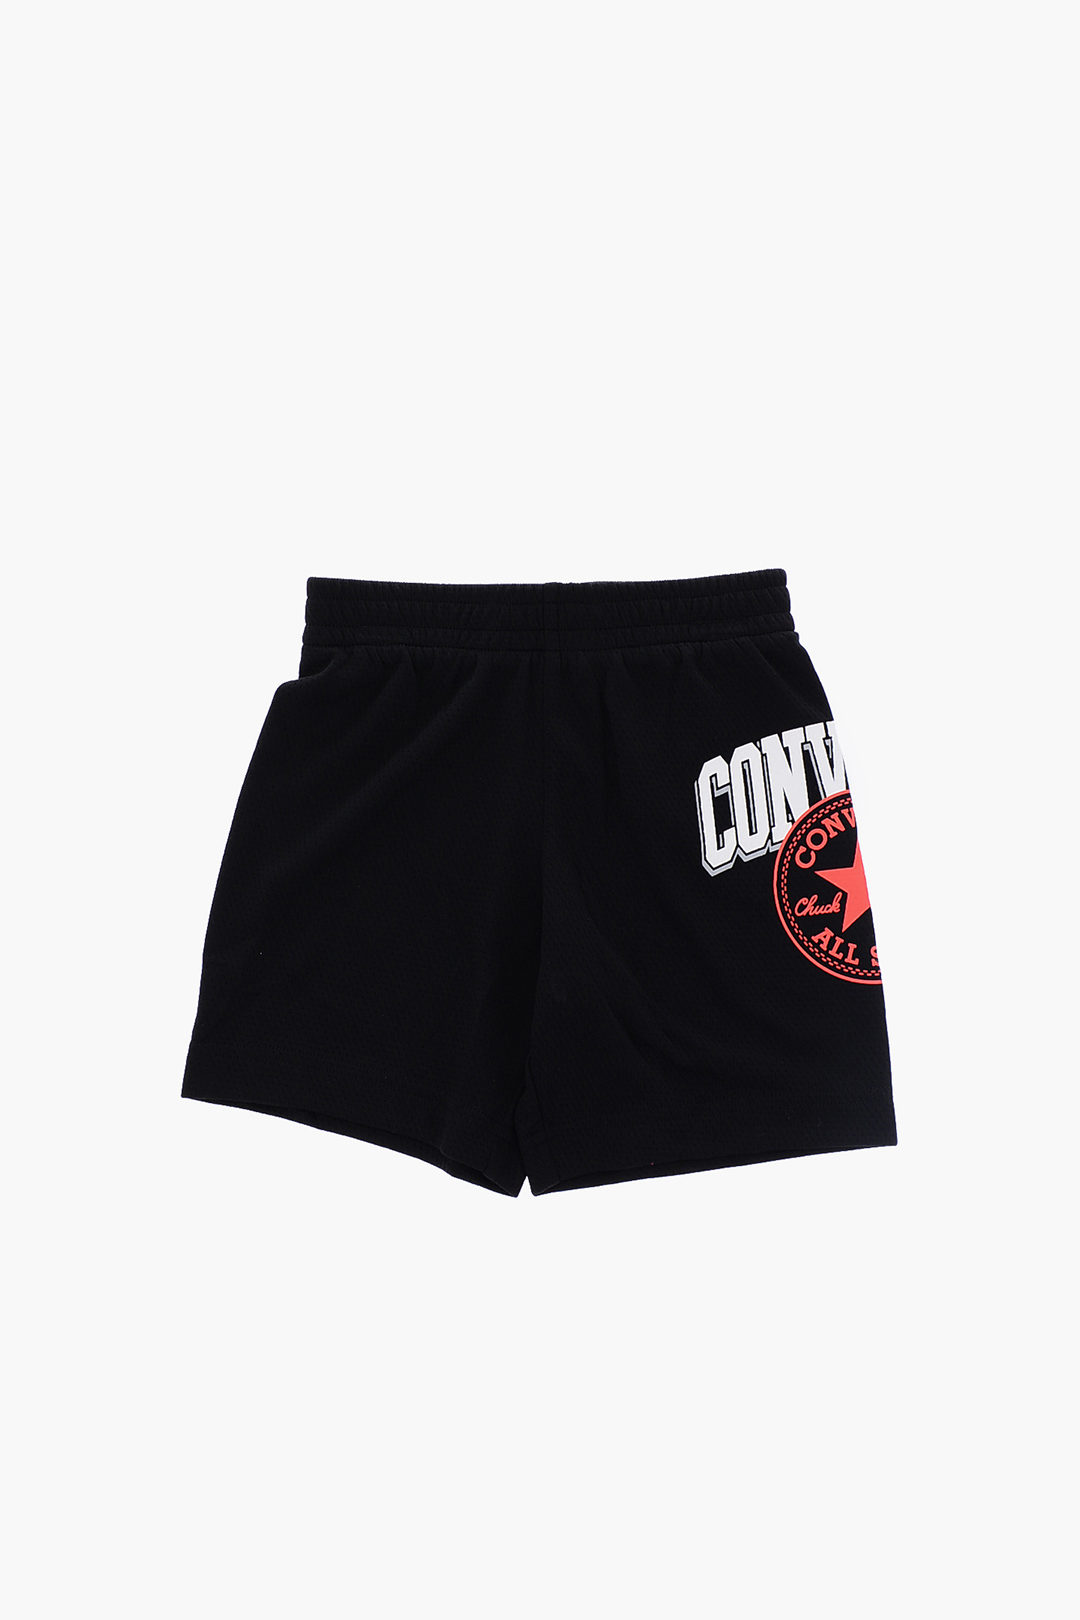 Converse KIDS ALL STAR CHUCK TAYLOR Shorts and T-shirt Set boys - Glamood  Outlet